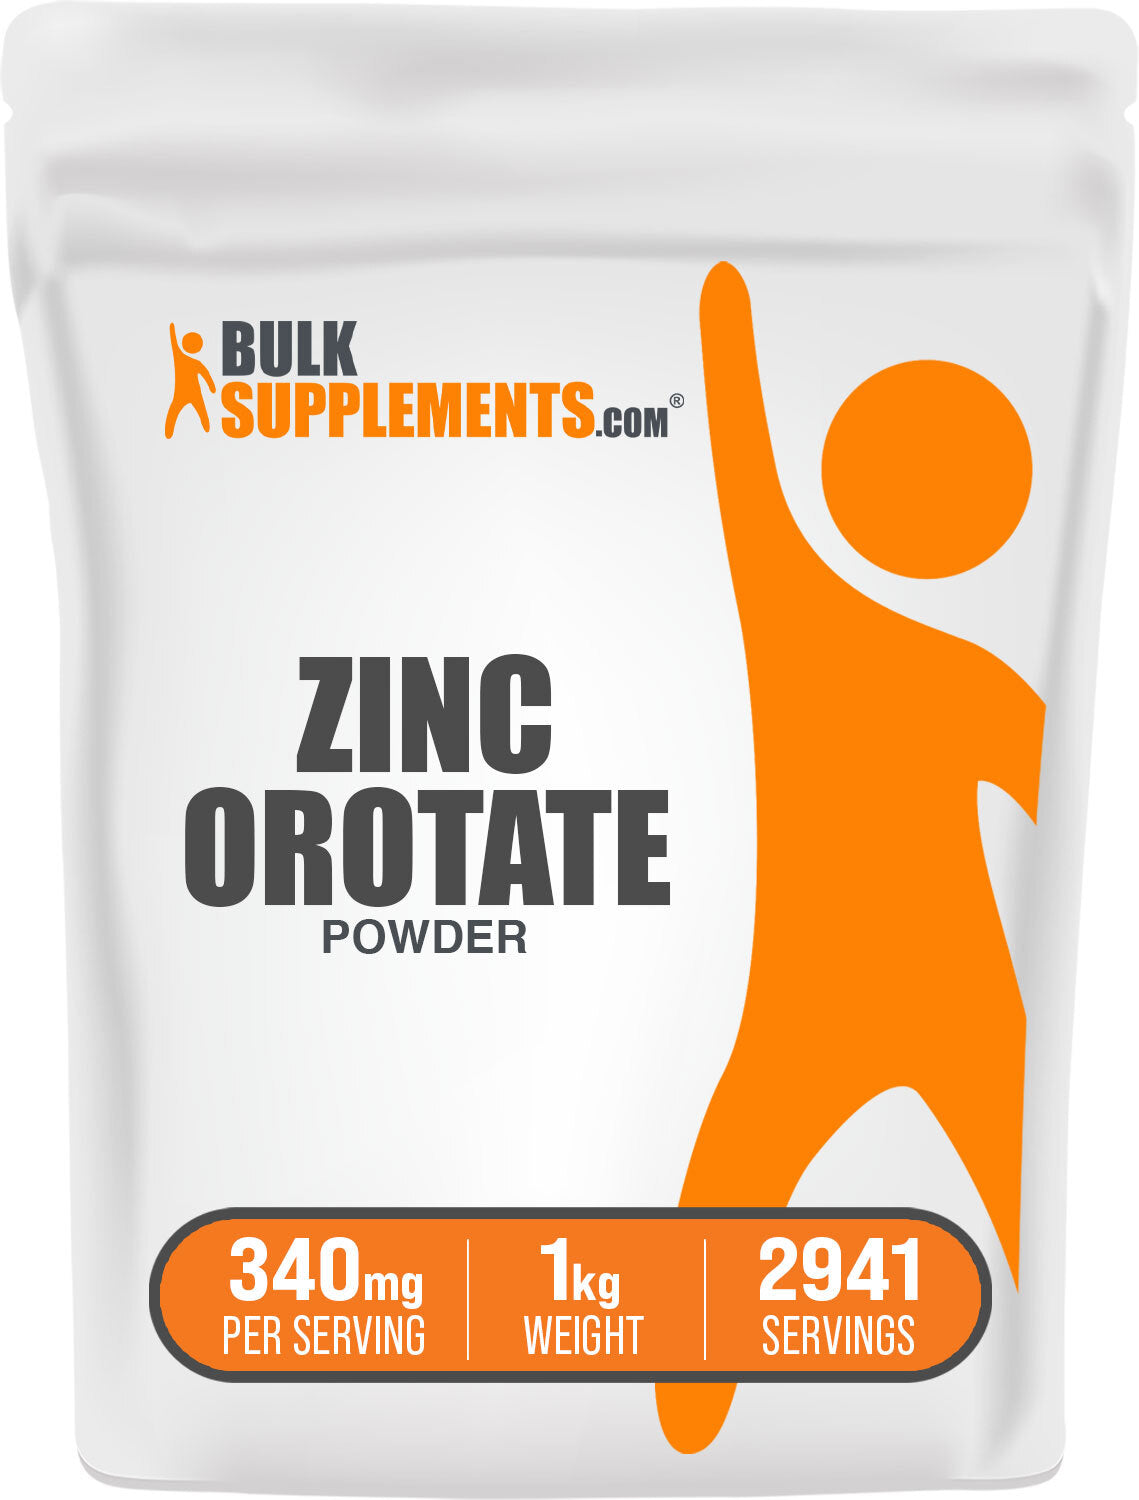 BulkSupplements Zinc Orotate Powder 1kg bag